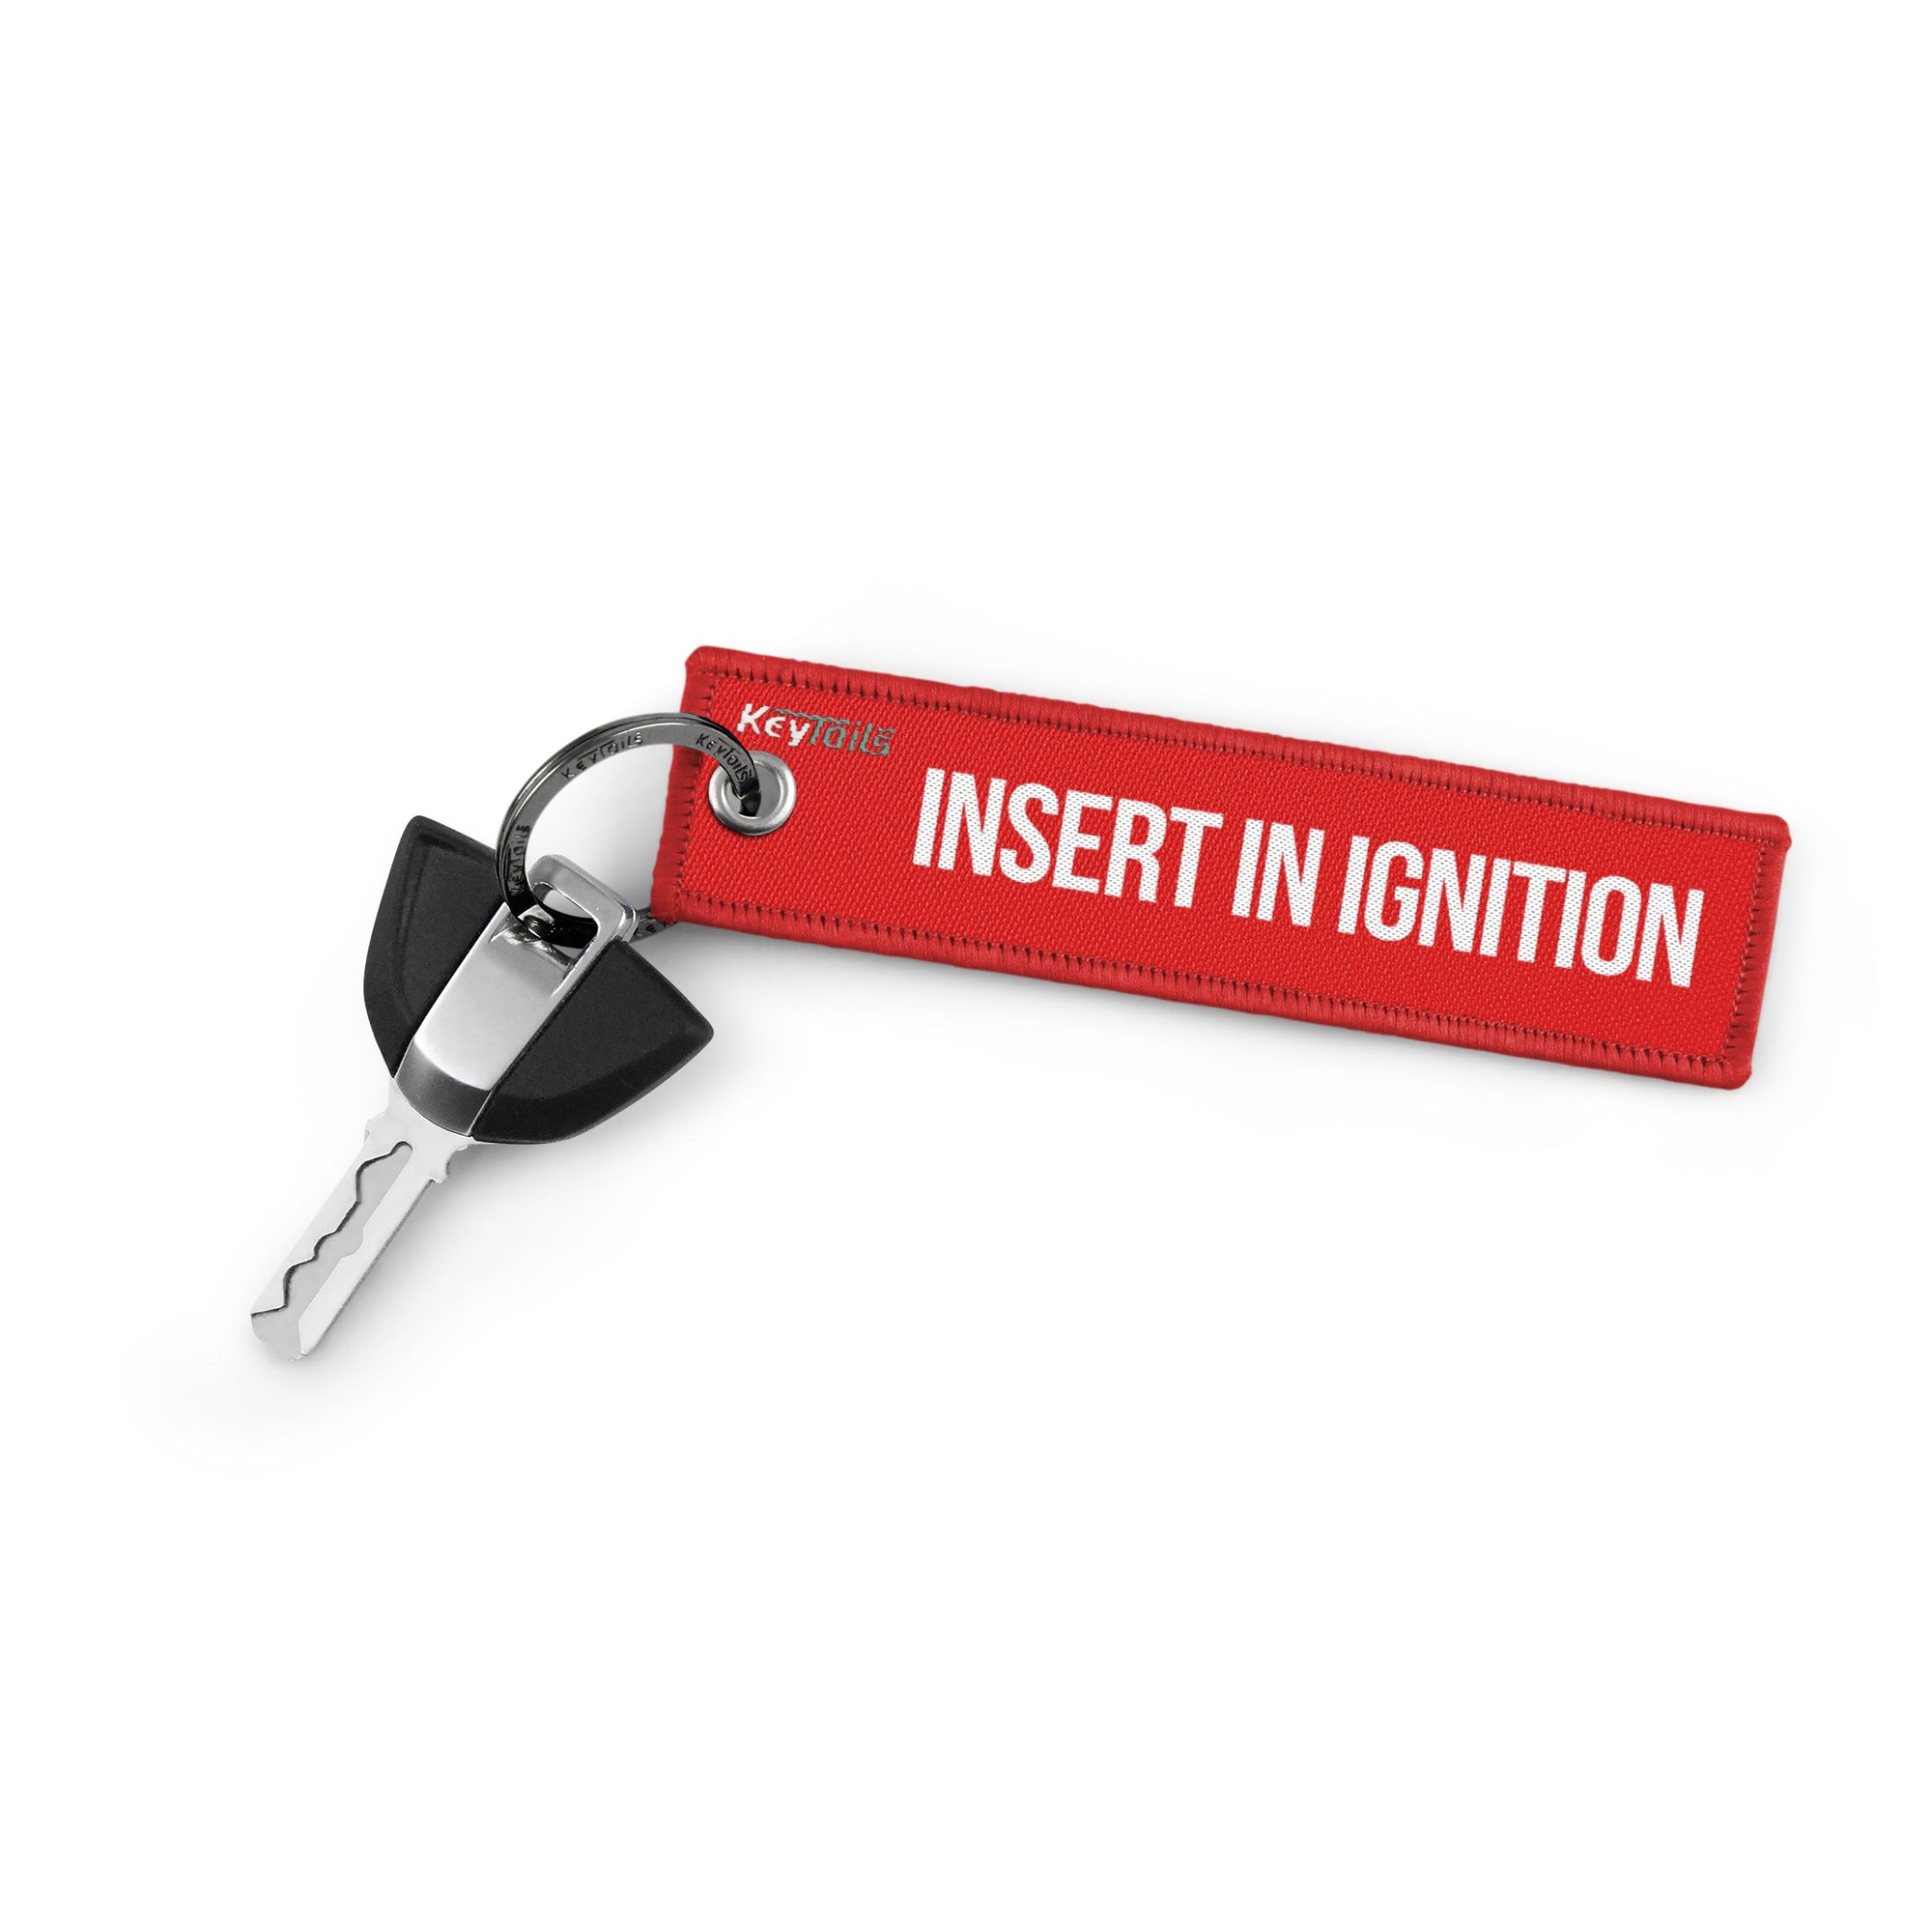 Insert In Ignition Keychain, Key Tag - Insert In Iginition